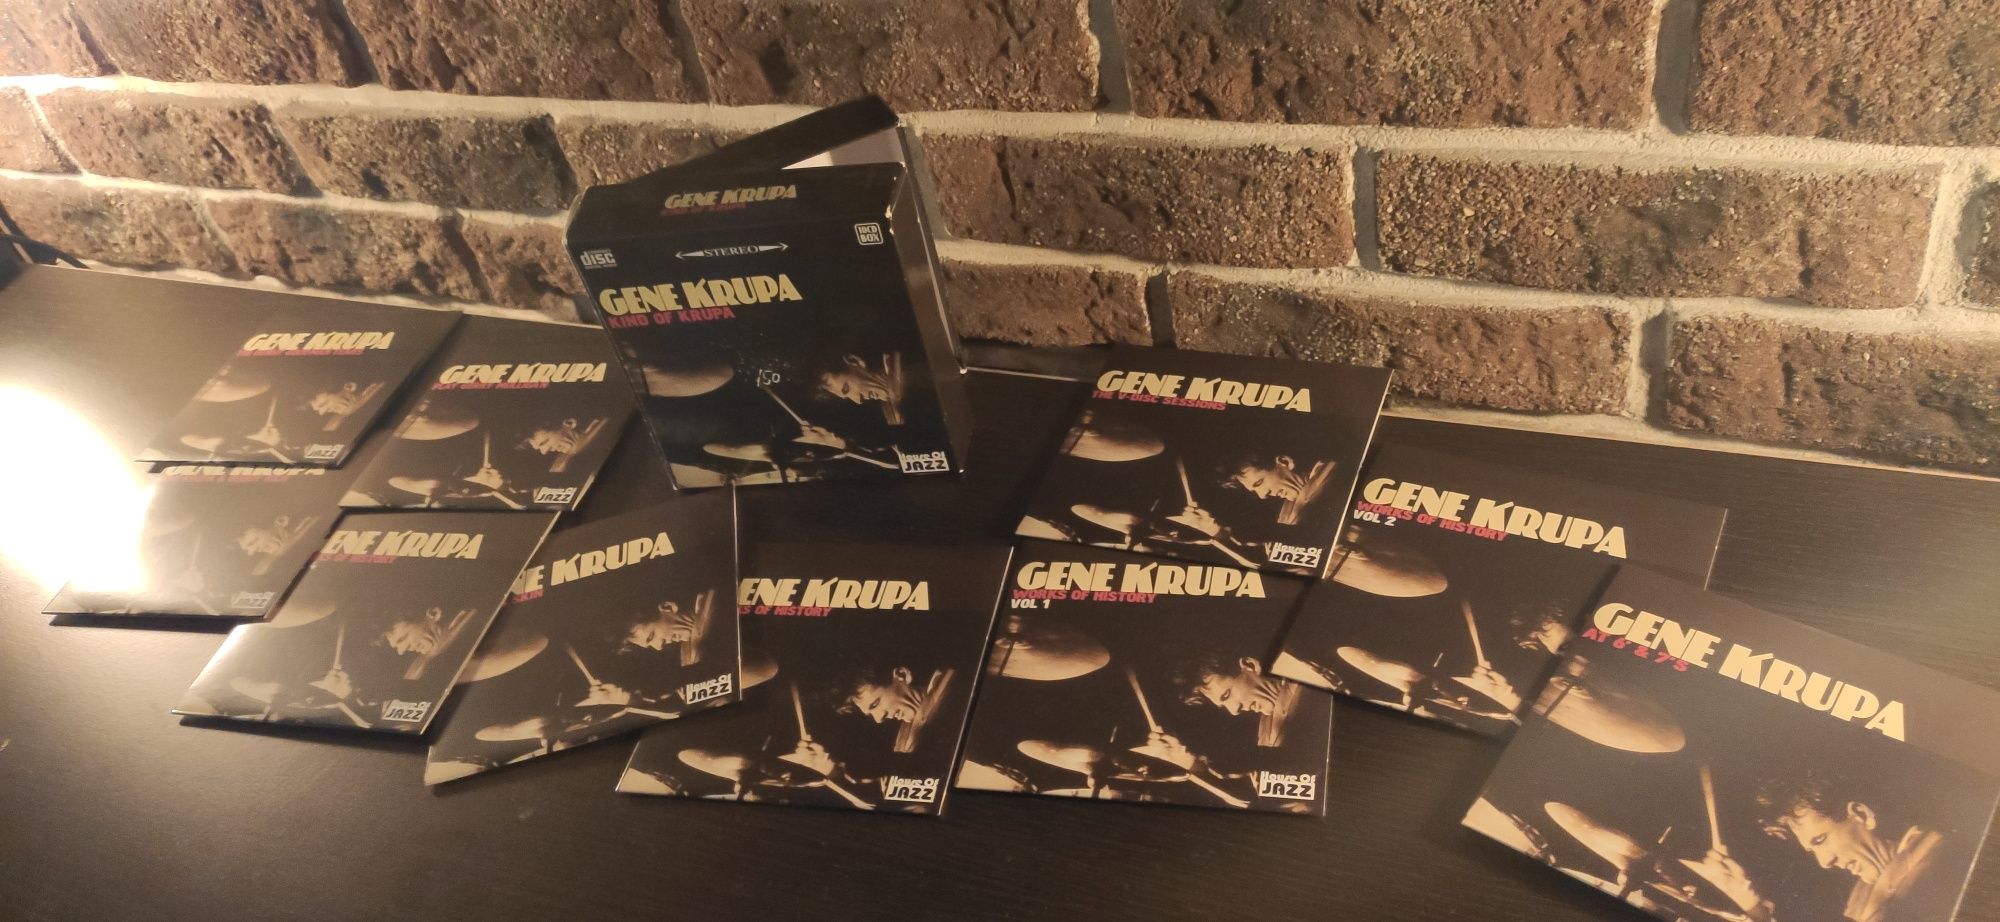 Фирменные CD диски Gene Krupa "Kind of krupa" BOX 10CD Jazz